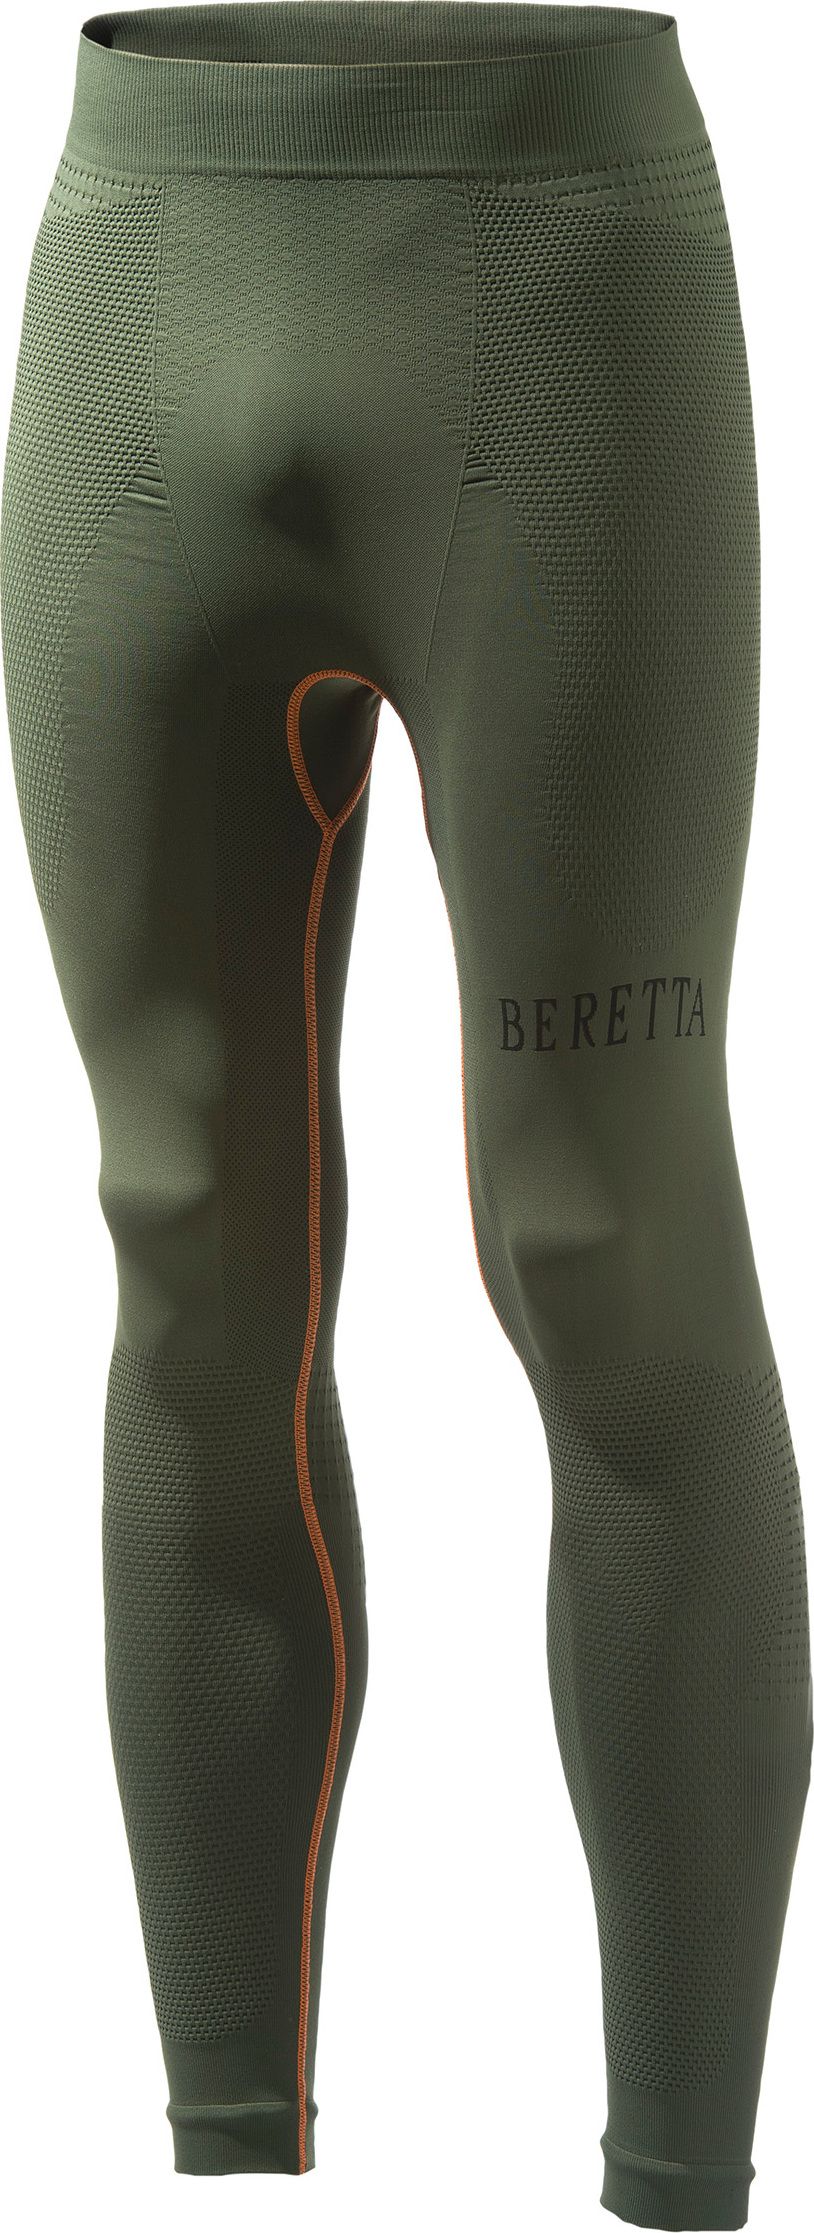 Beretta Men's Body Mapping 3D Pants Green